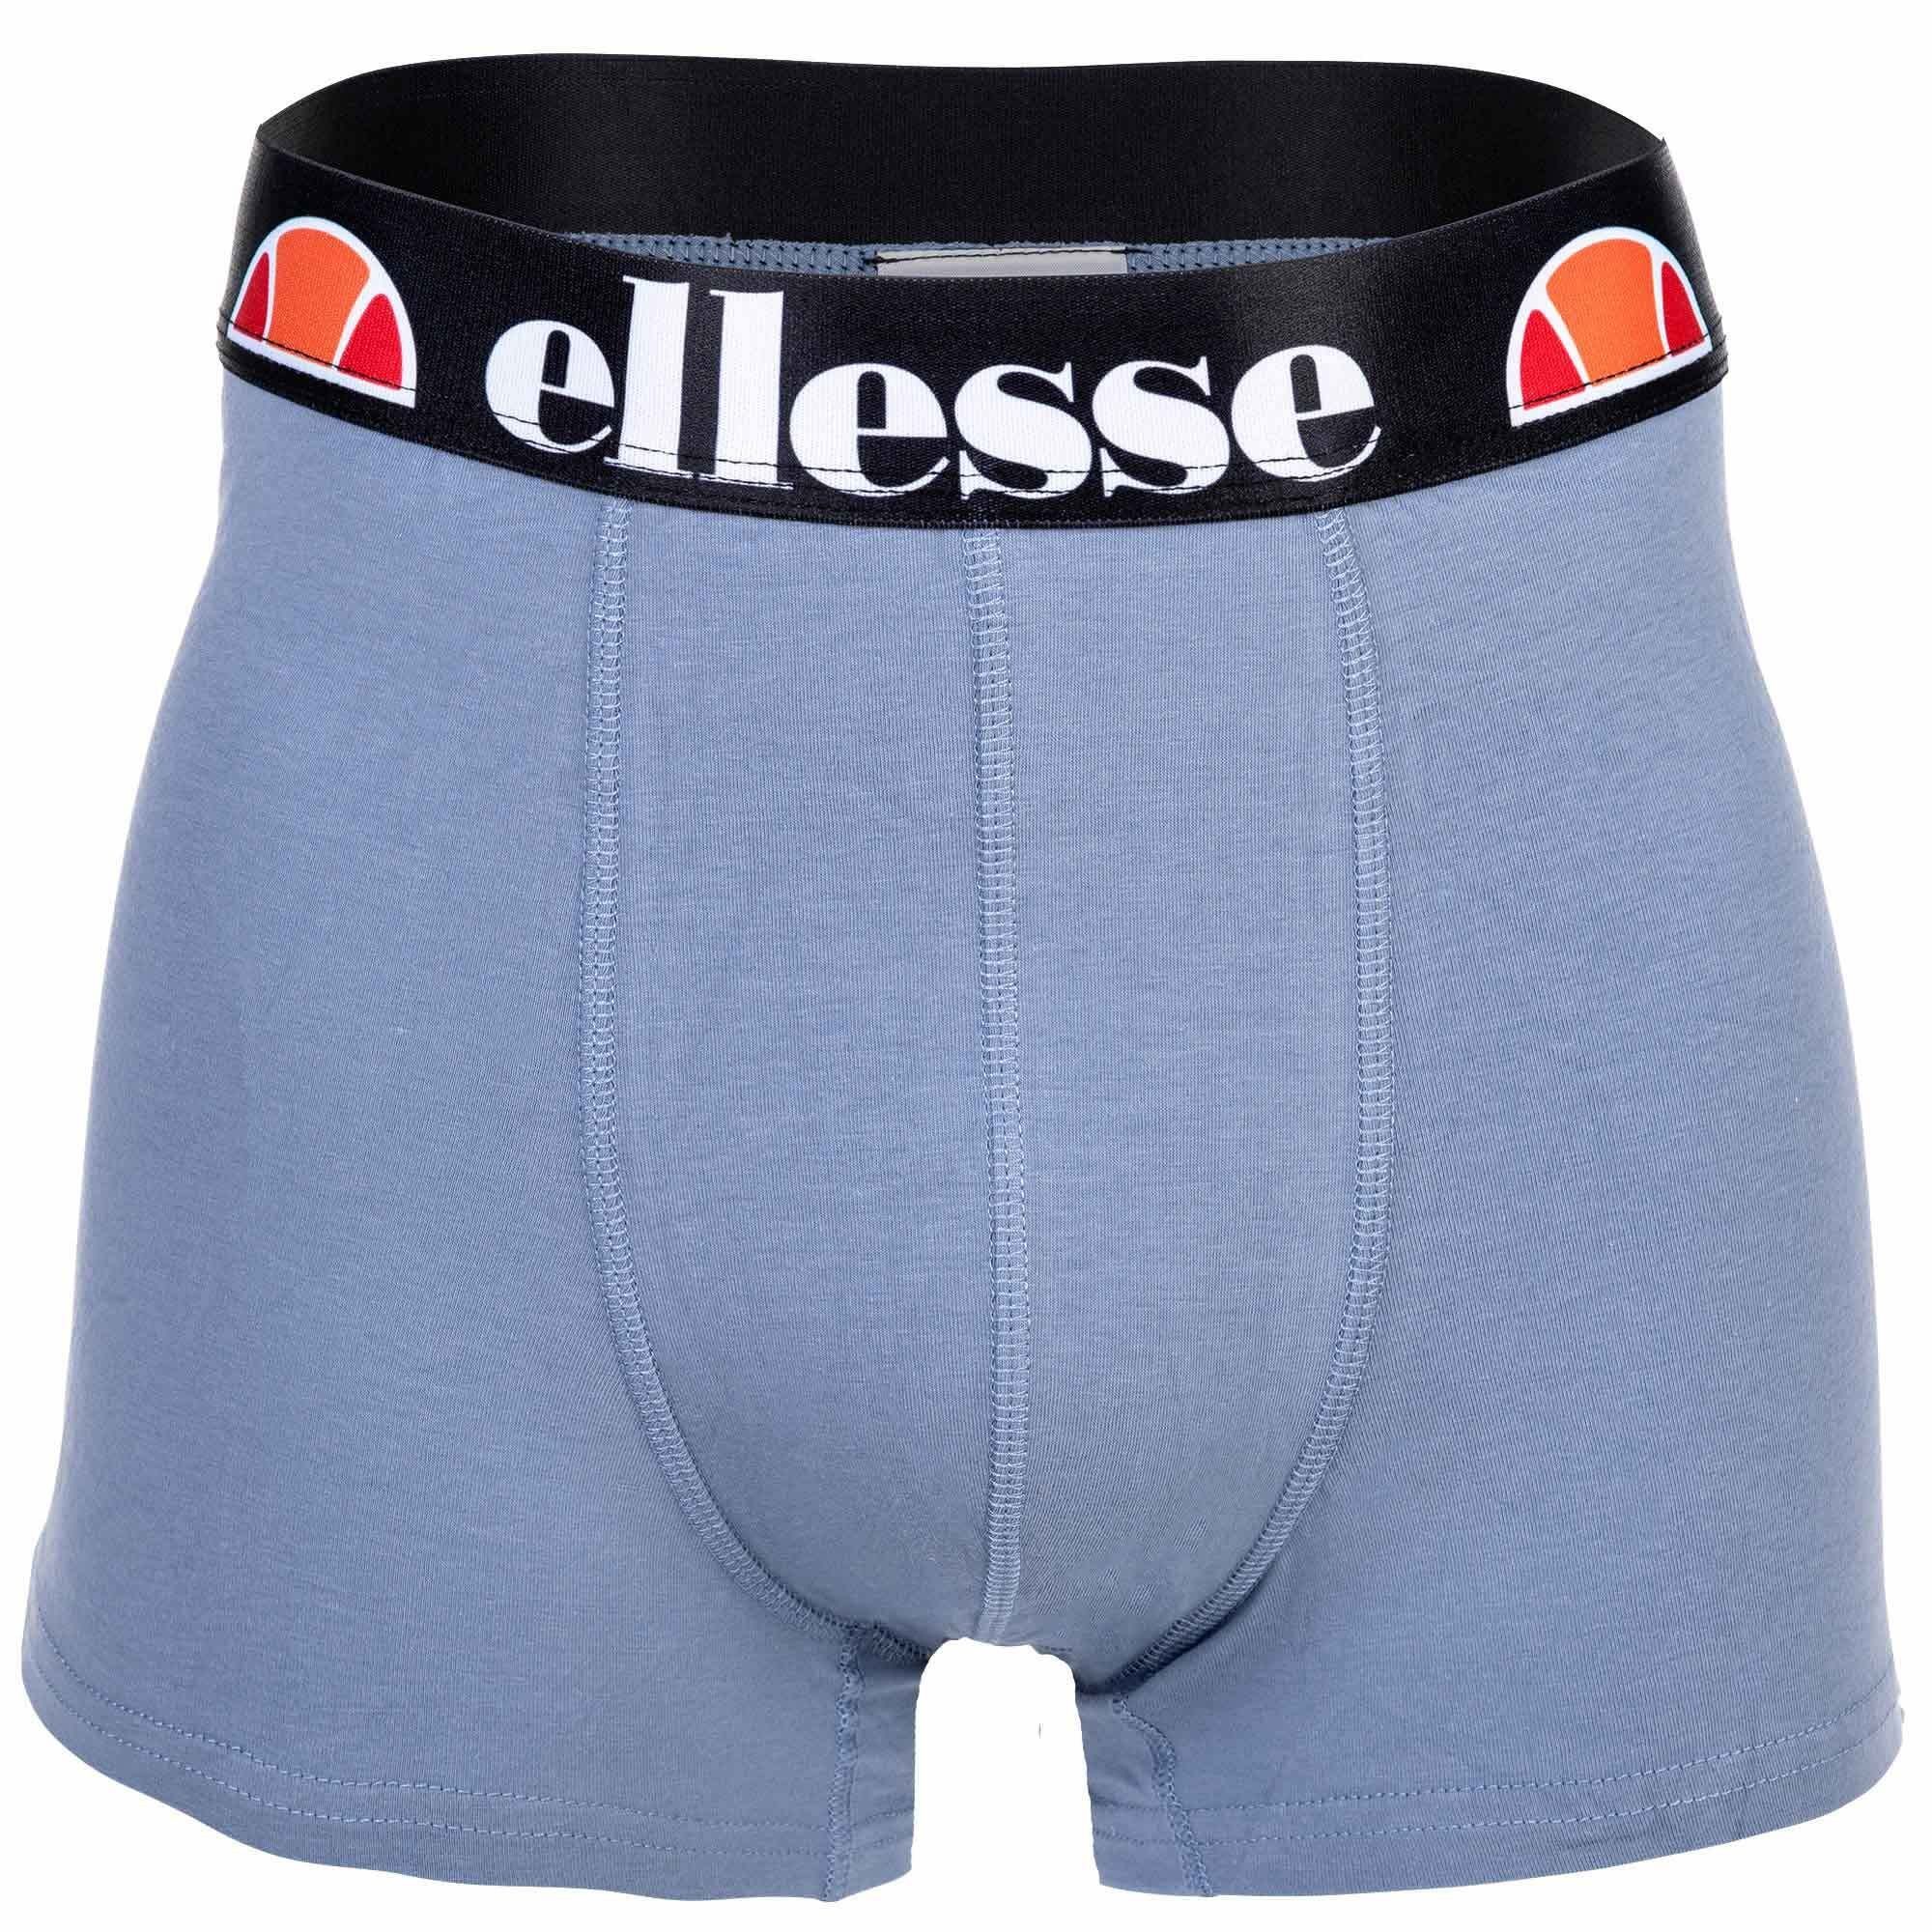 Herren Shorts - Fashion Boxer Pack Ellesse 3er GRILLO, Schwarz/Grün/Blau Boxer